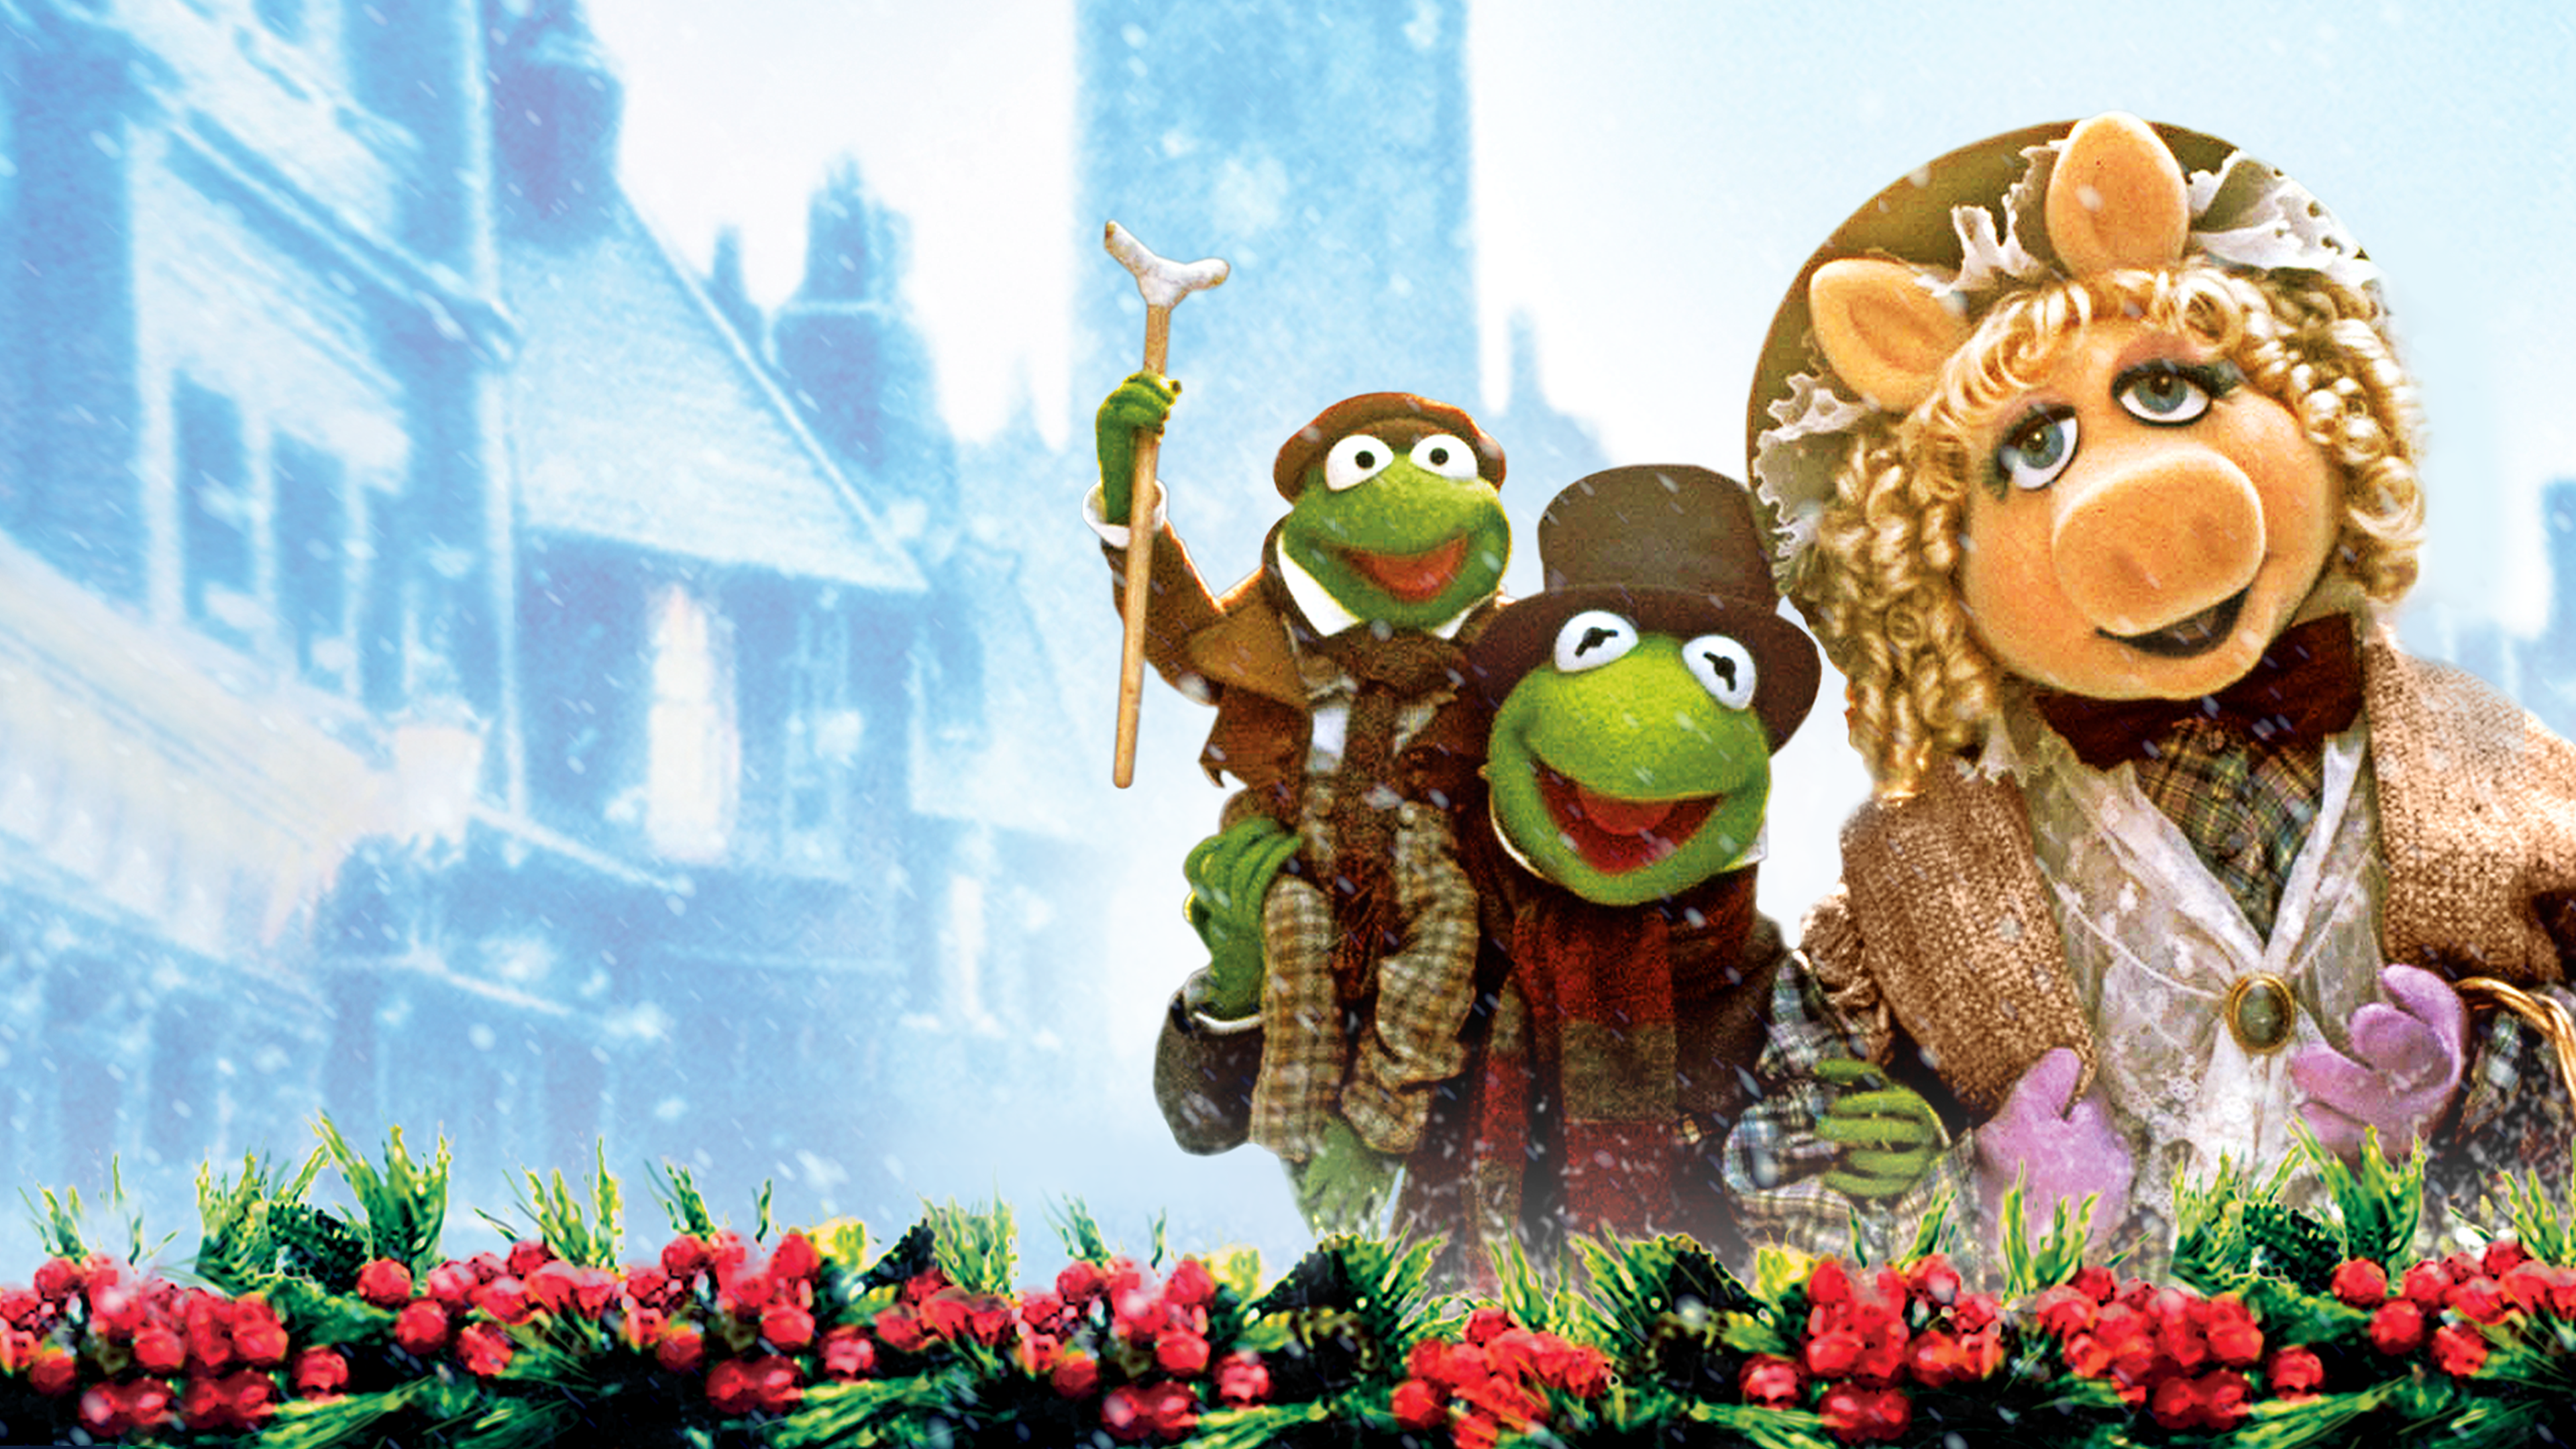 O Natal dos Muppets